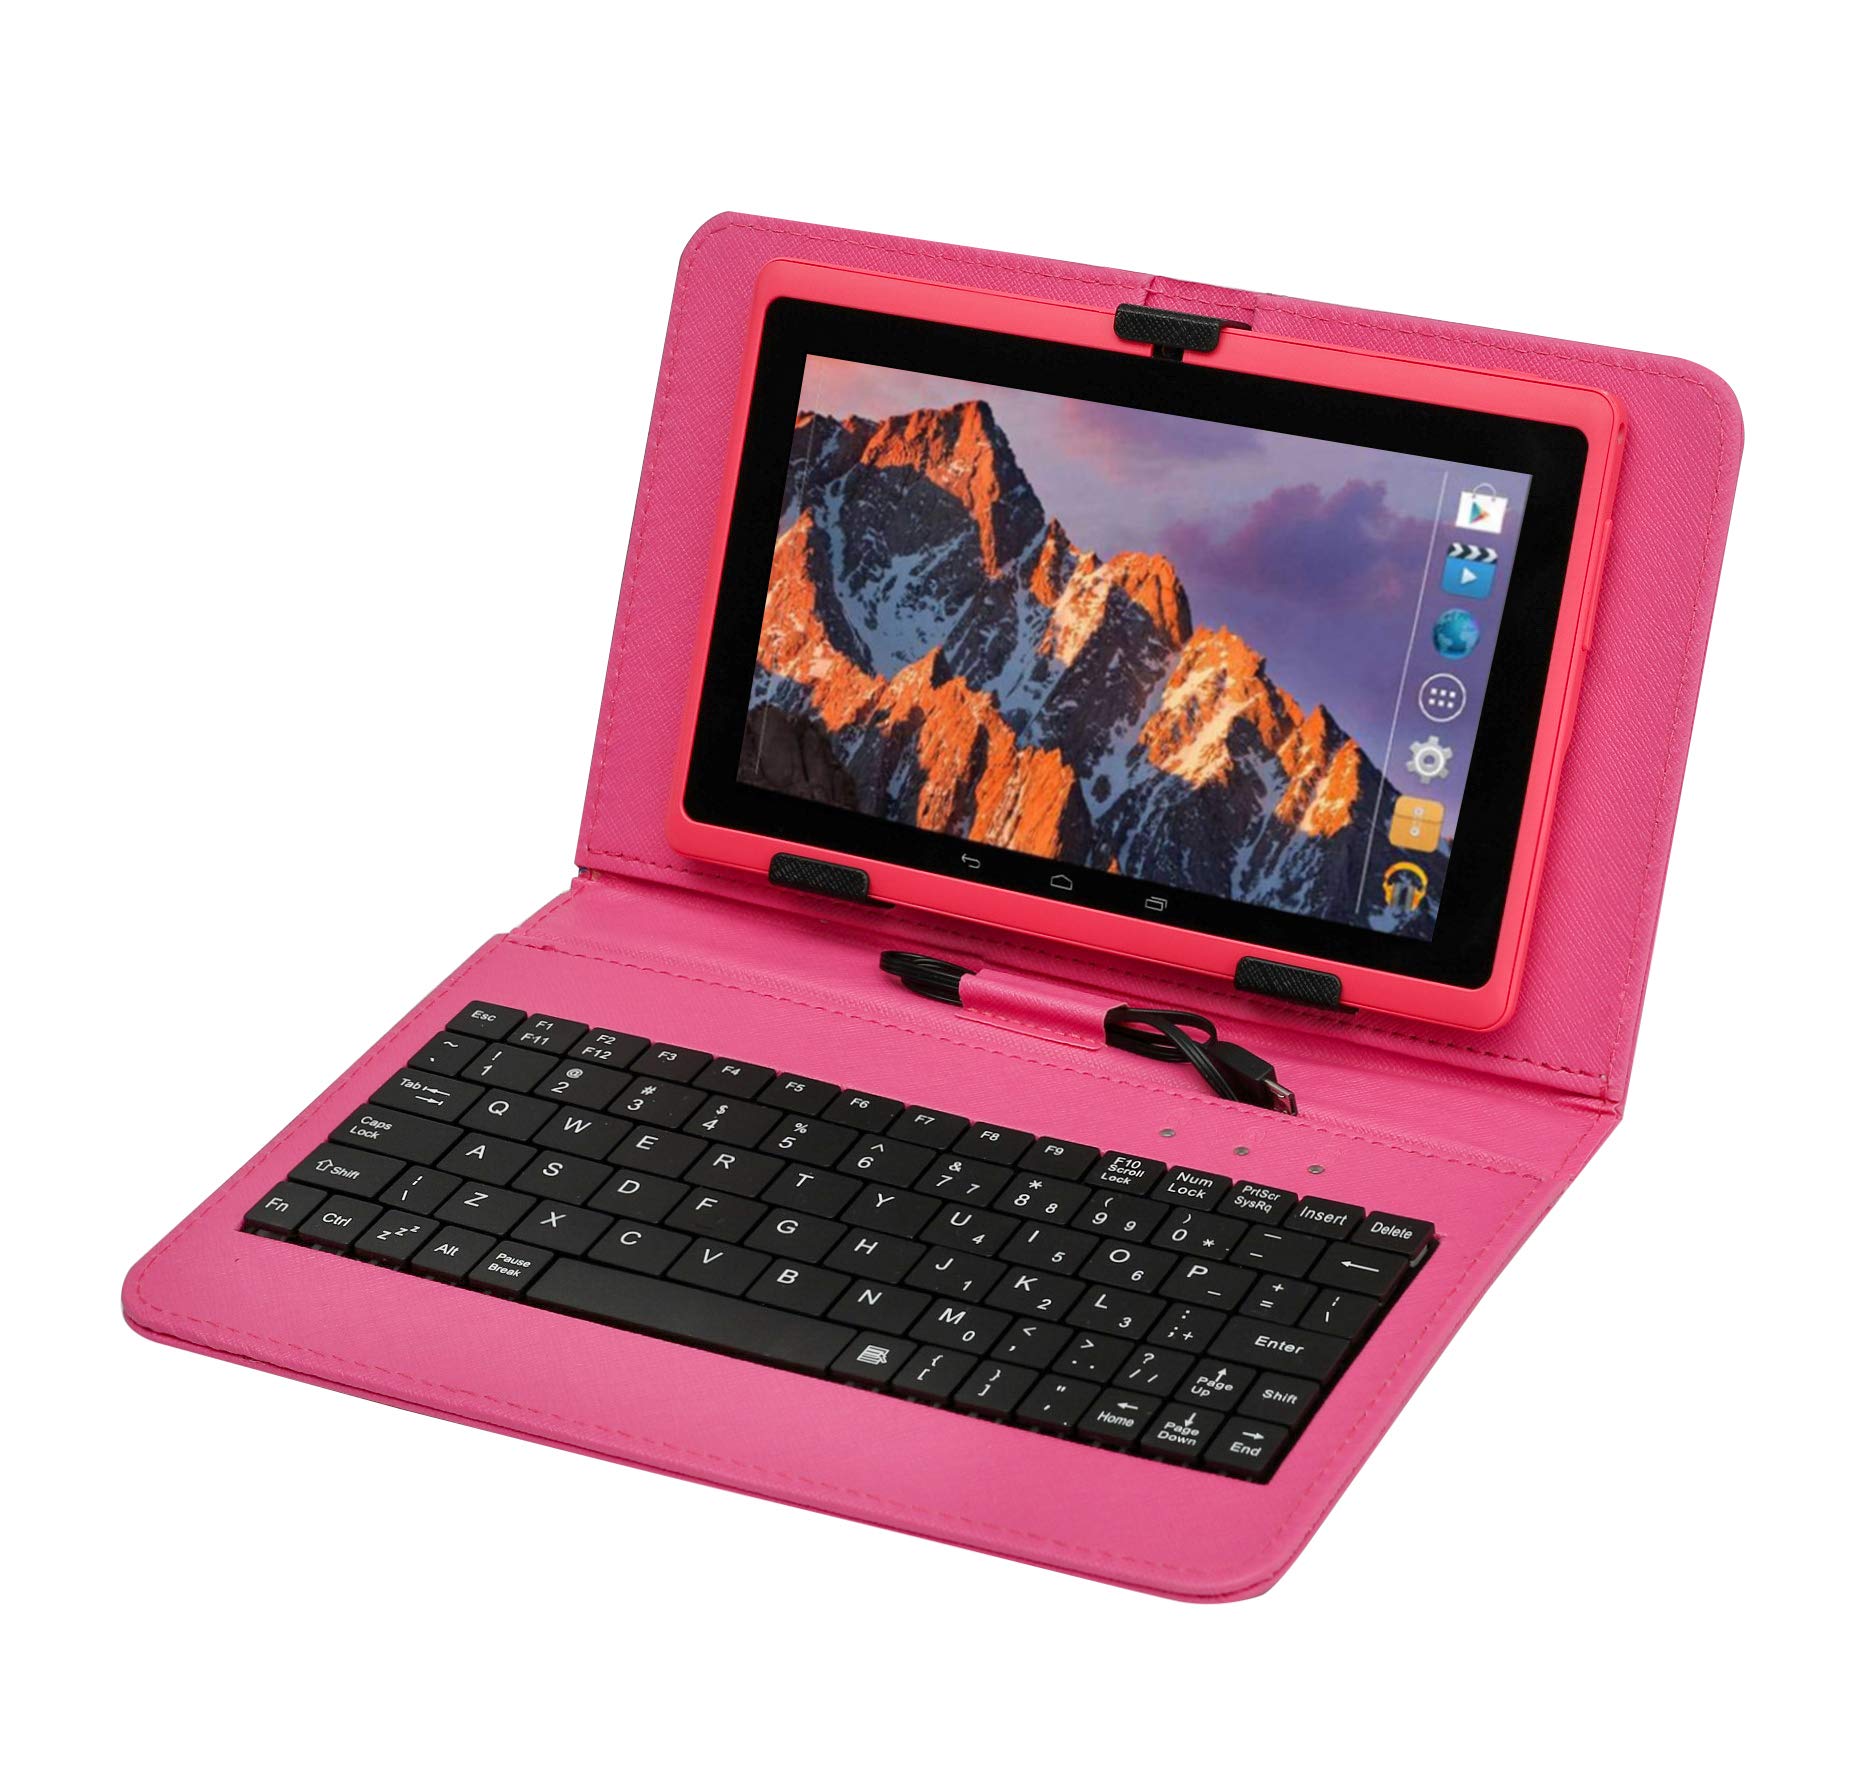 Tablet PC Touchscreen 7 Zoll,Tablet Computer Mit Tastatur Android Quad-core Laptop,WiFi,Dual-Kamera,Bluetooth,8 GB ROM,1 GB RAM,Mit Touch Stift